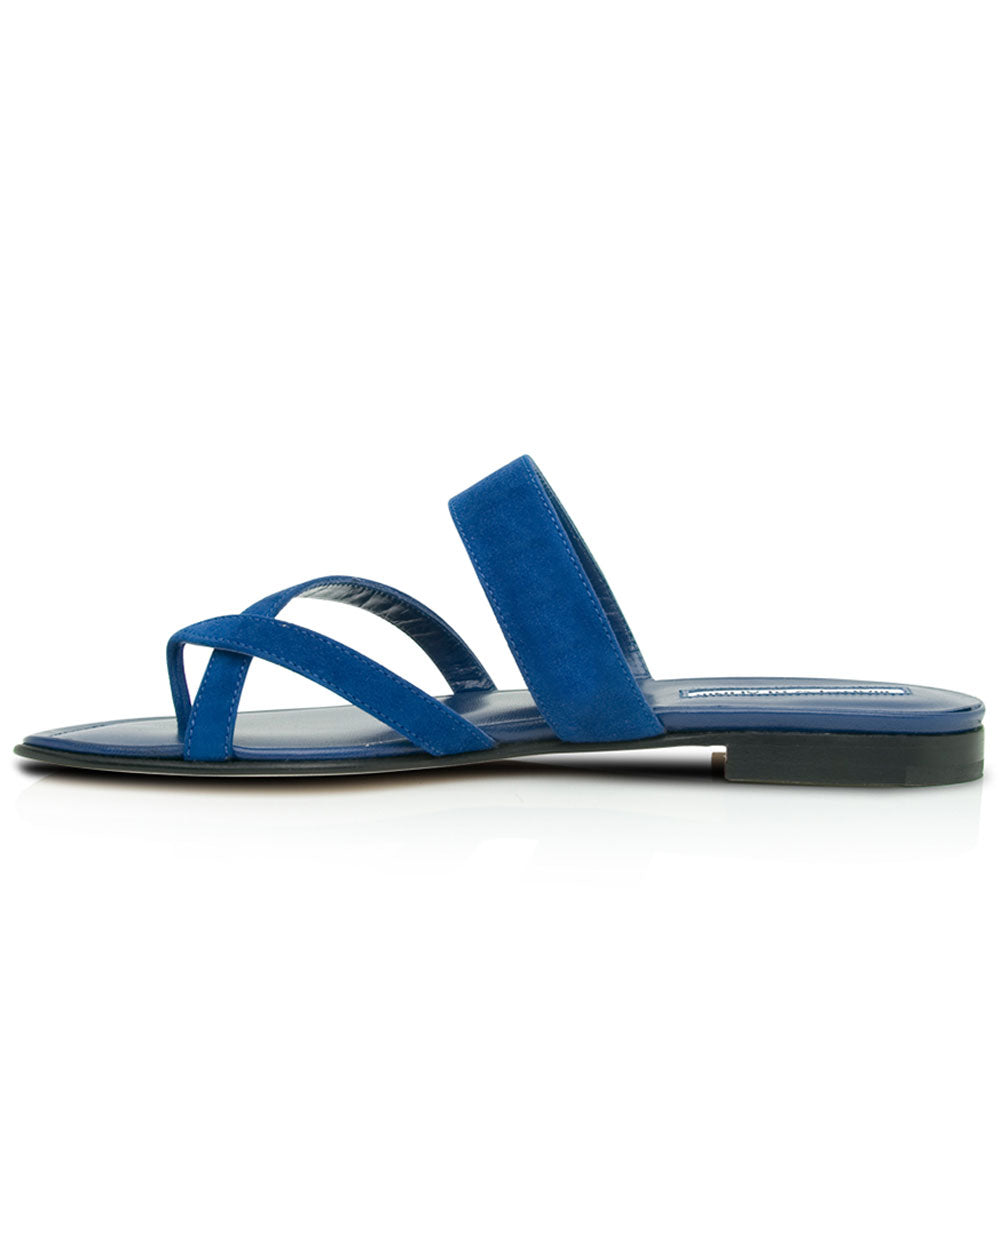 Susa Suede Sandals in Blue